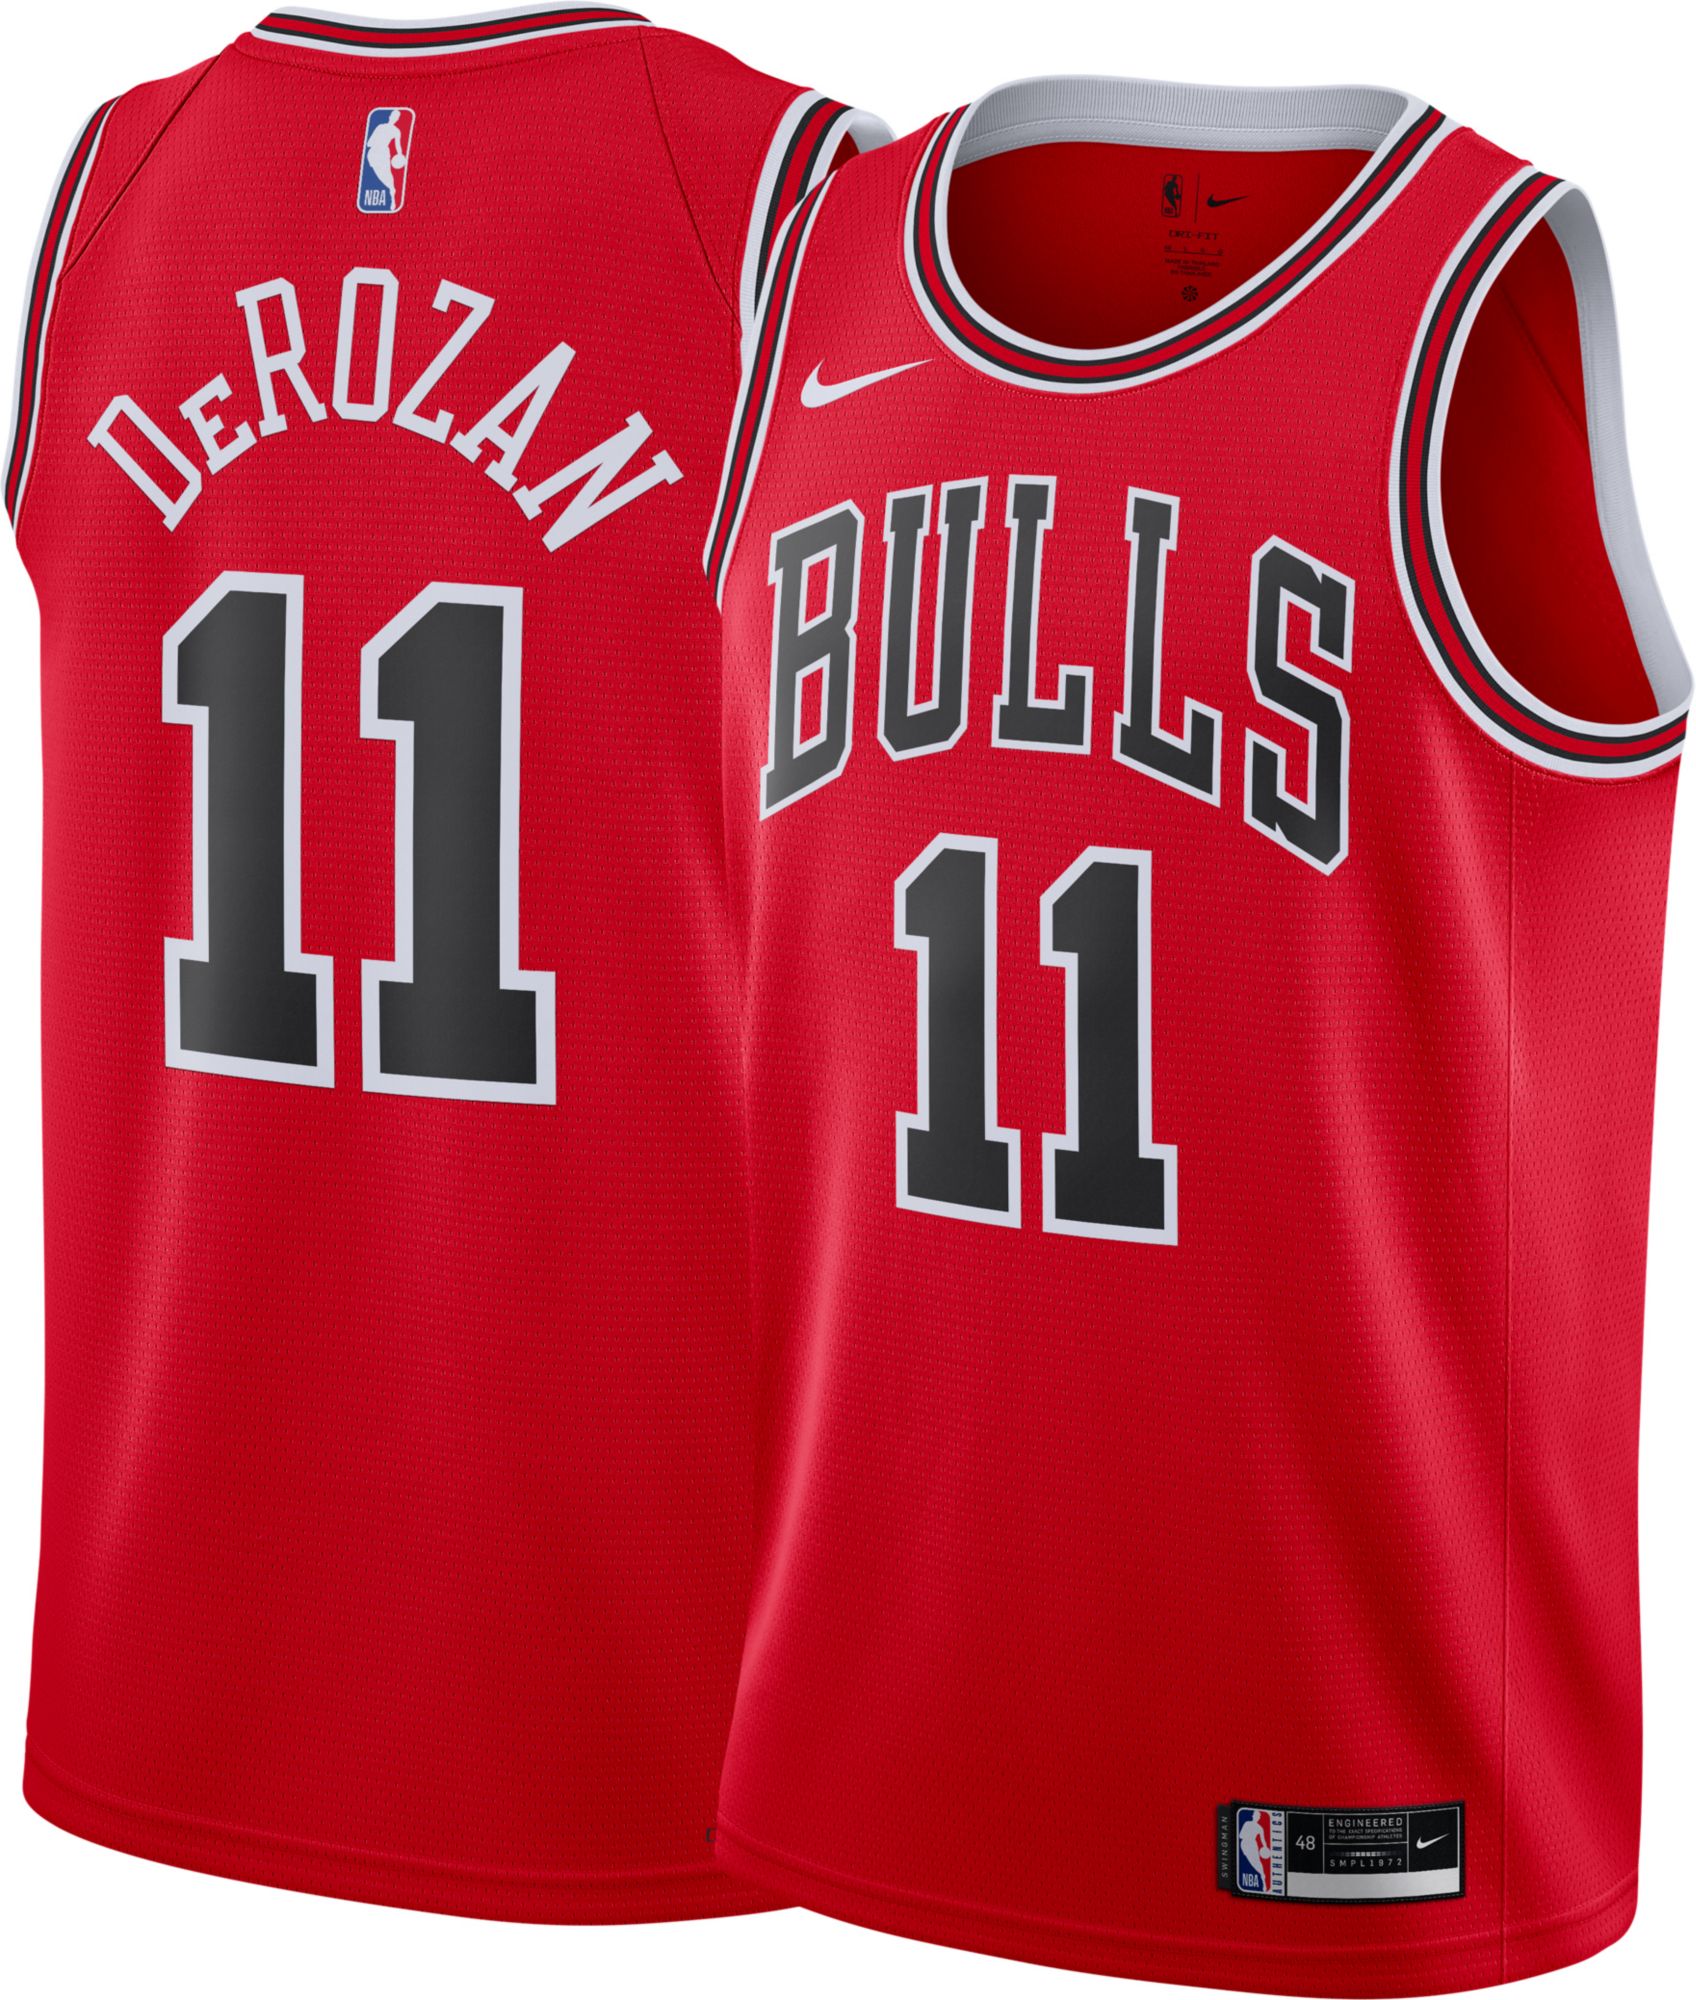 Nike Men's Chicago Bulls DeMar DeRozan #11 Black T-Shirt, Large